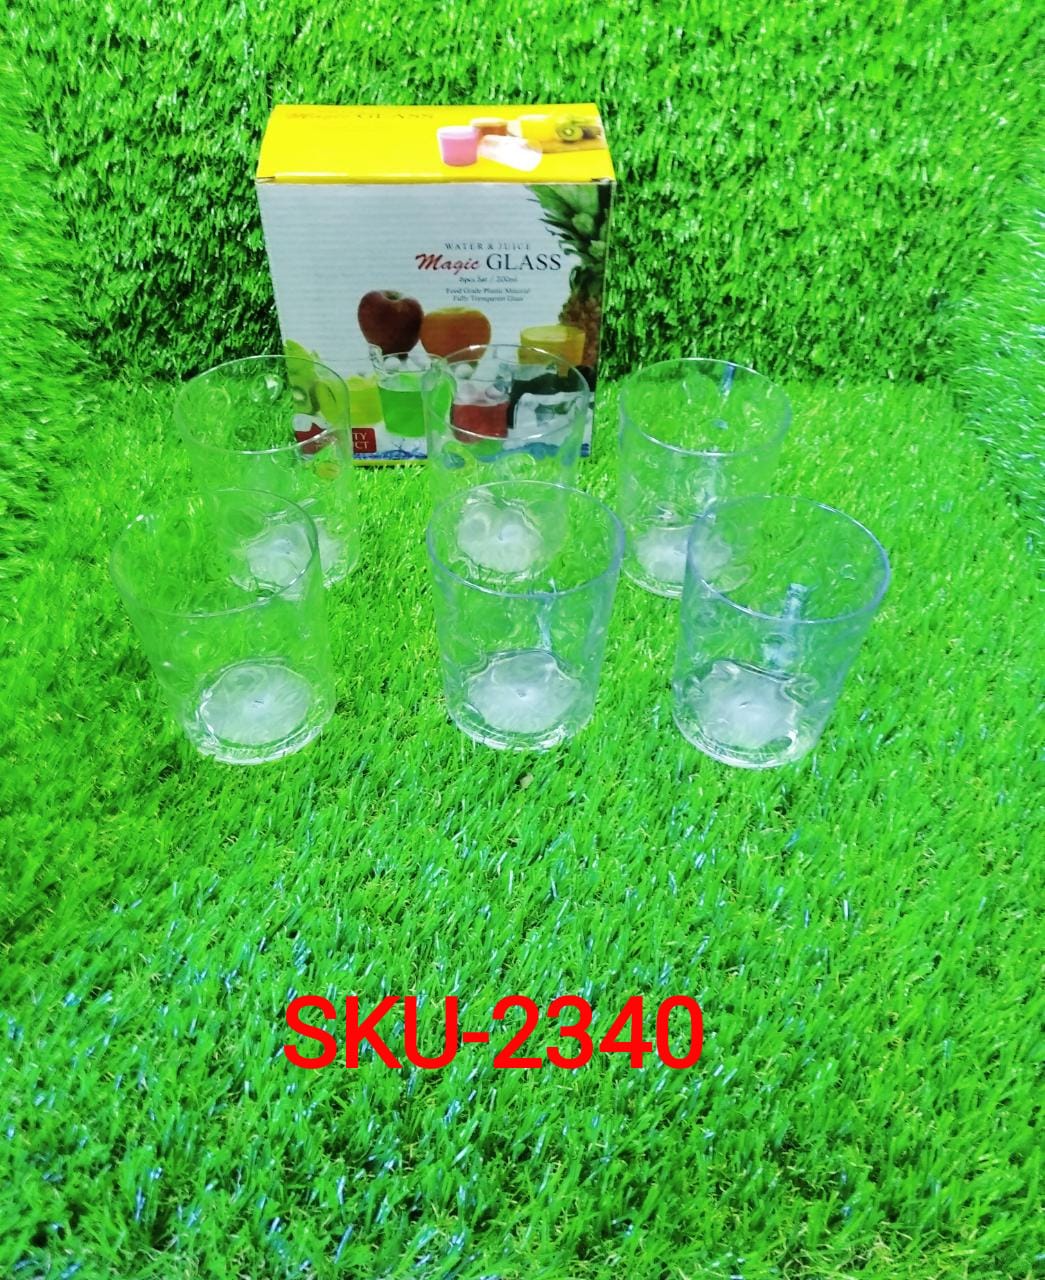 2340 Multi Purpose Unbreakable Drinking Glass (Set of 6 Pieces) (300ml) DeoDap